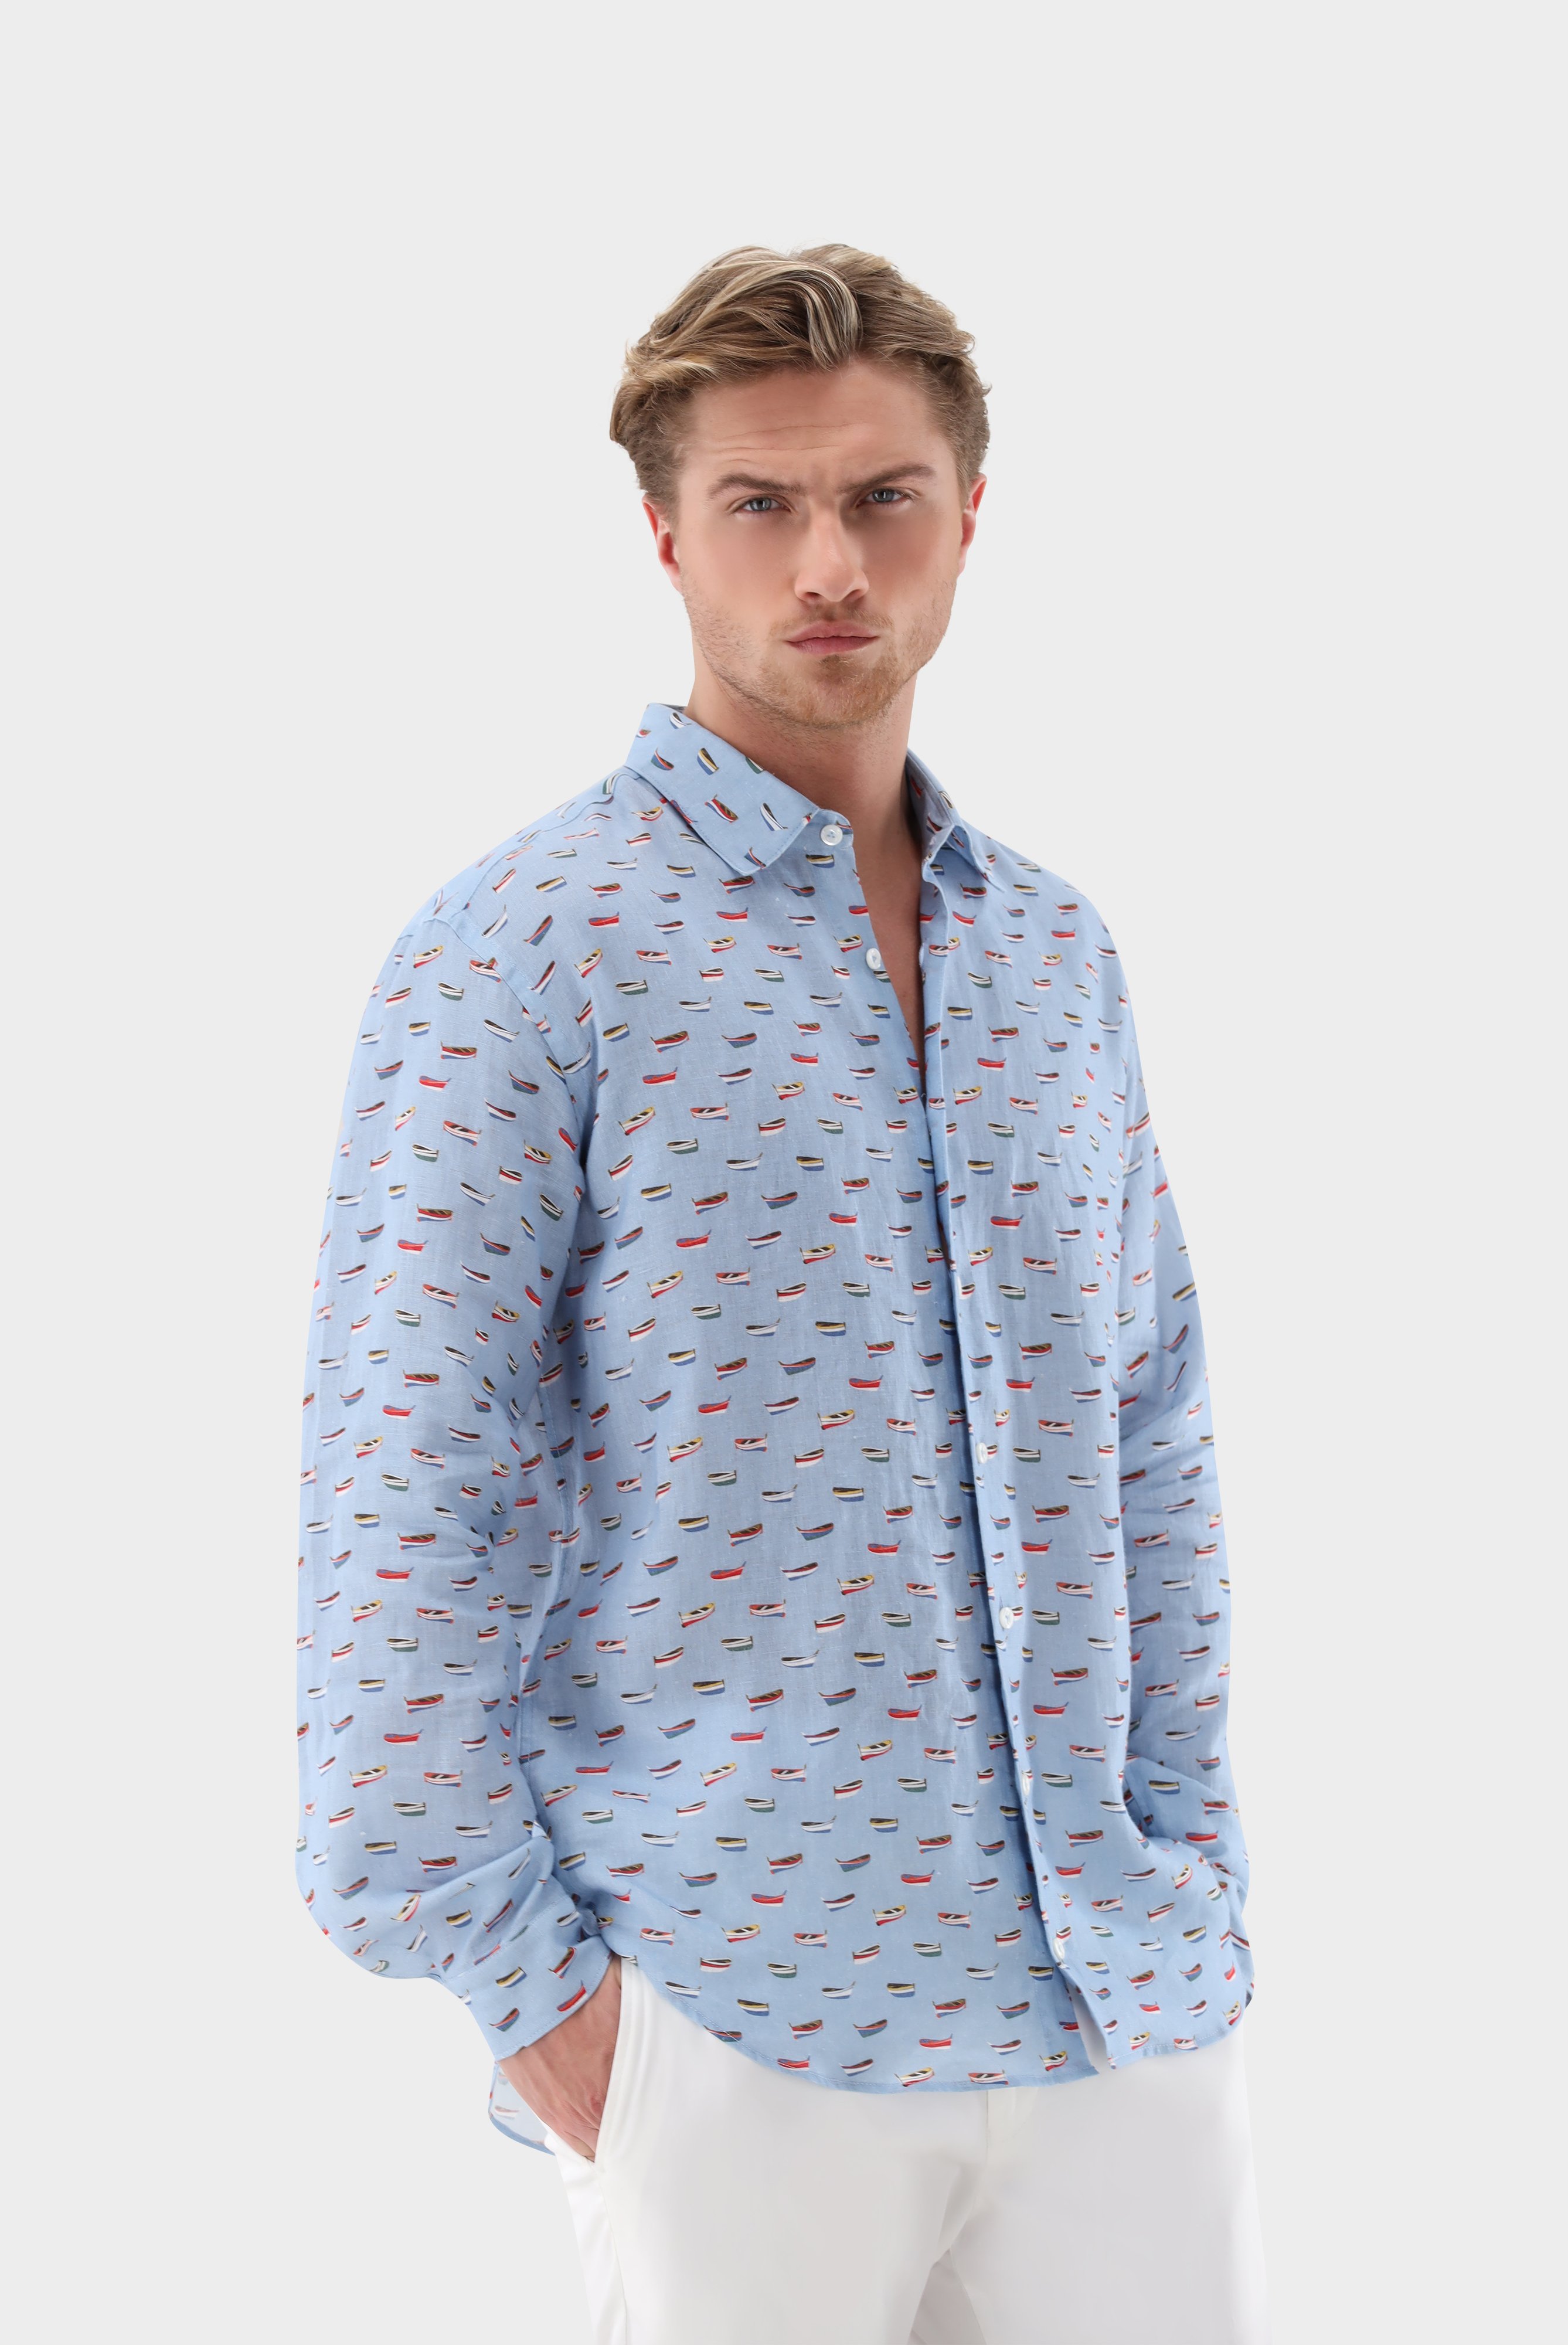 Casual Shirts+Linen Shirt with Boat Print+20.2020.9V.170348.730.38